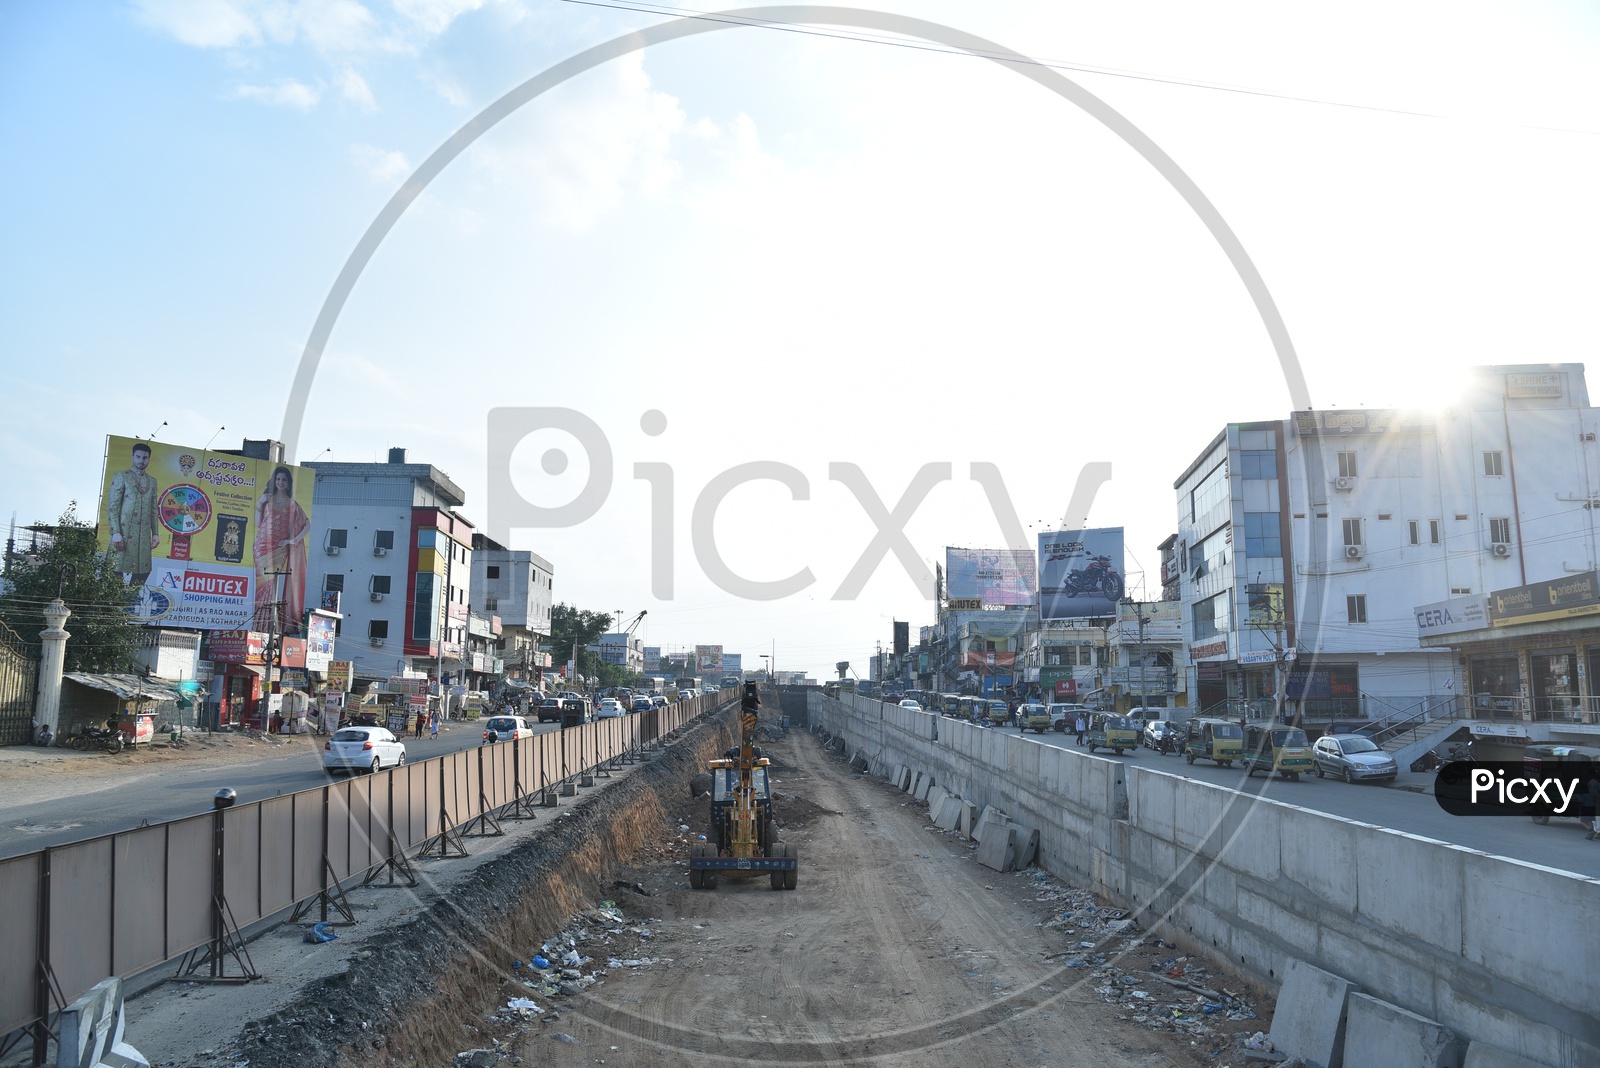 Under Pass Construction at LB Nagar Ring Road